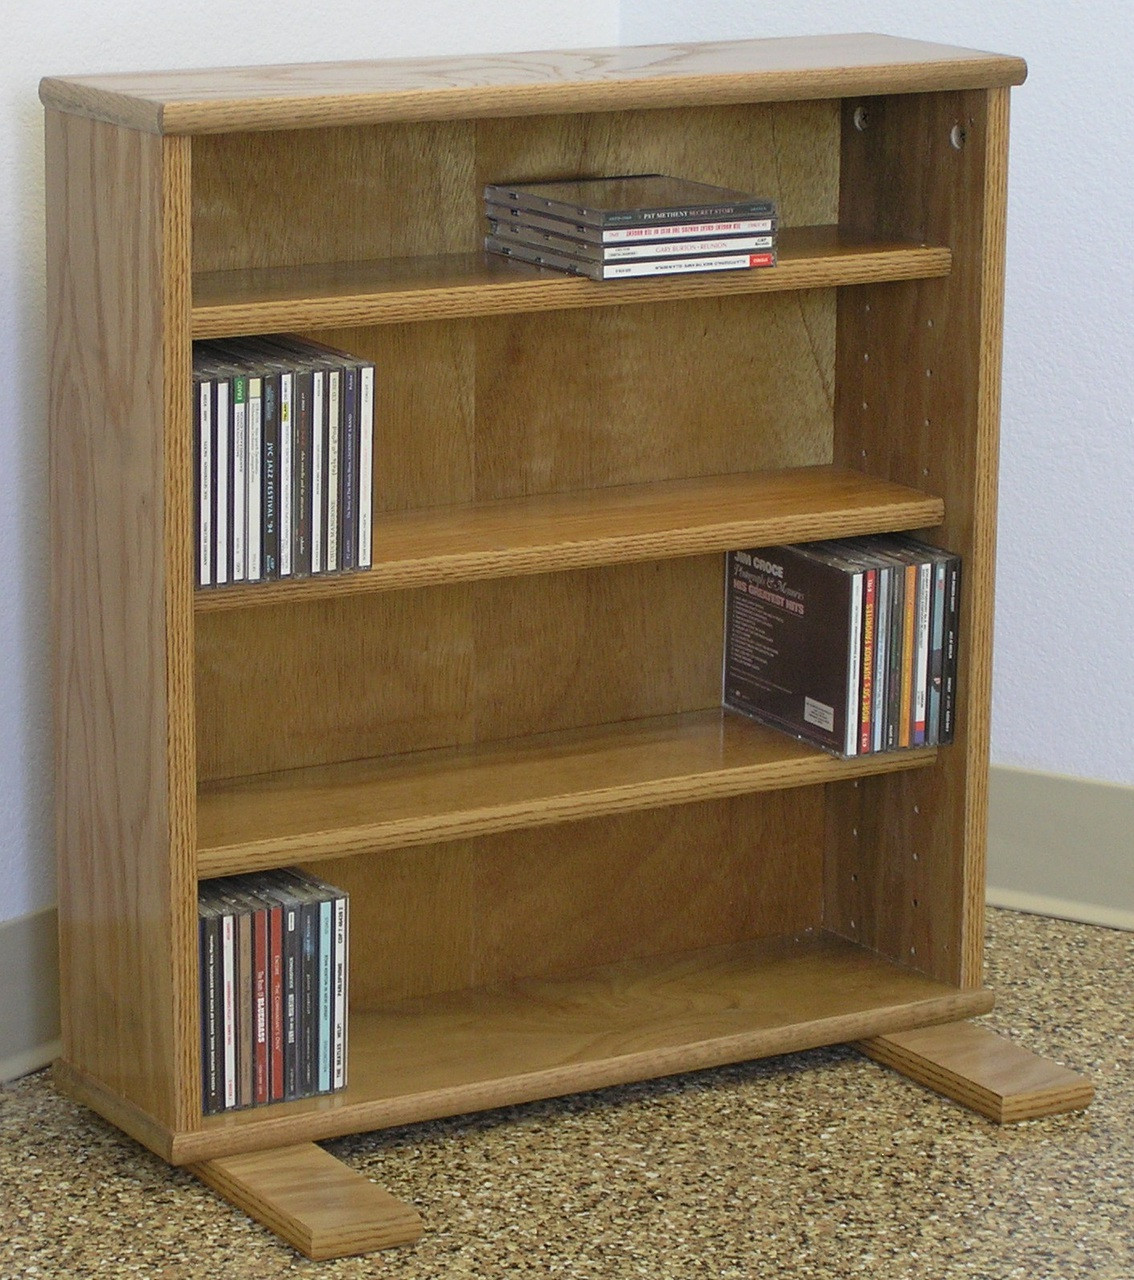 Custom real wood adjustable shelf - plywood core with your choice of wood  veneer